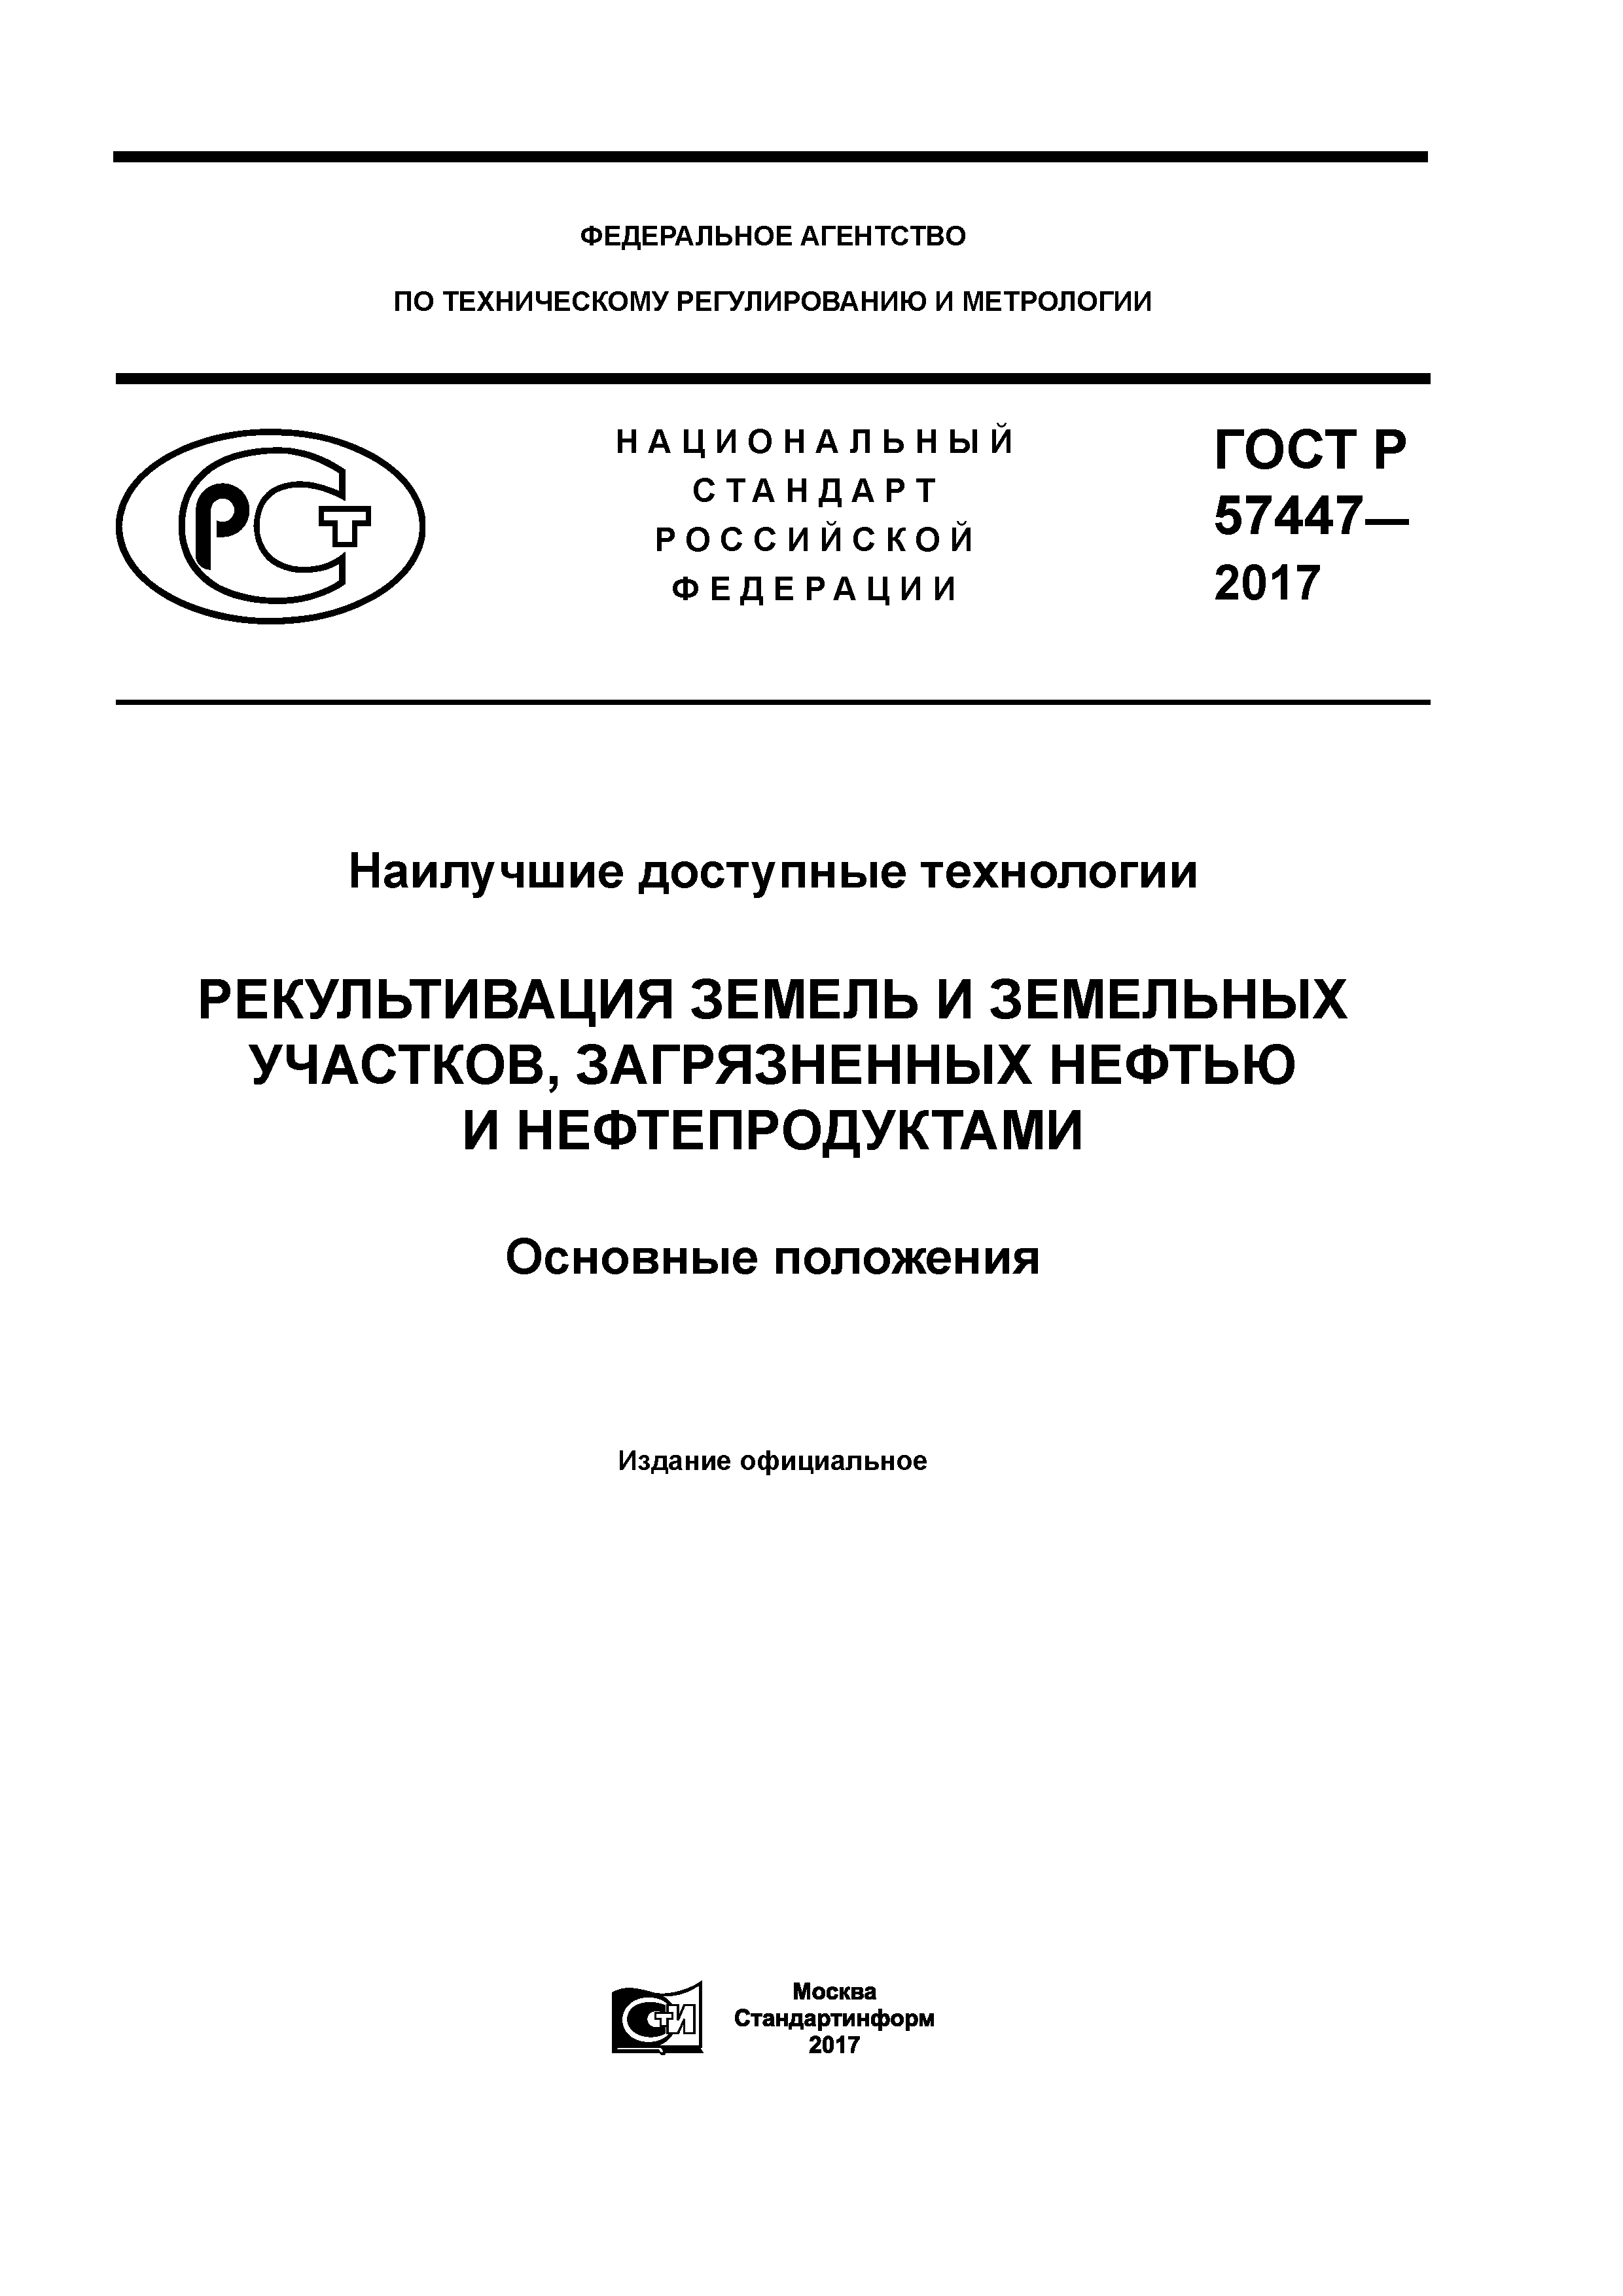 ГОСТ Р 57447-2017